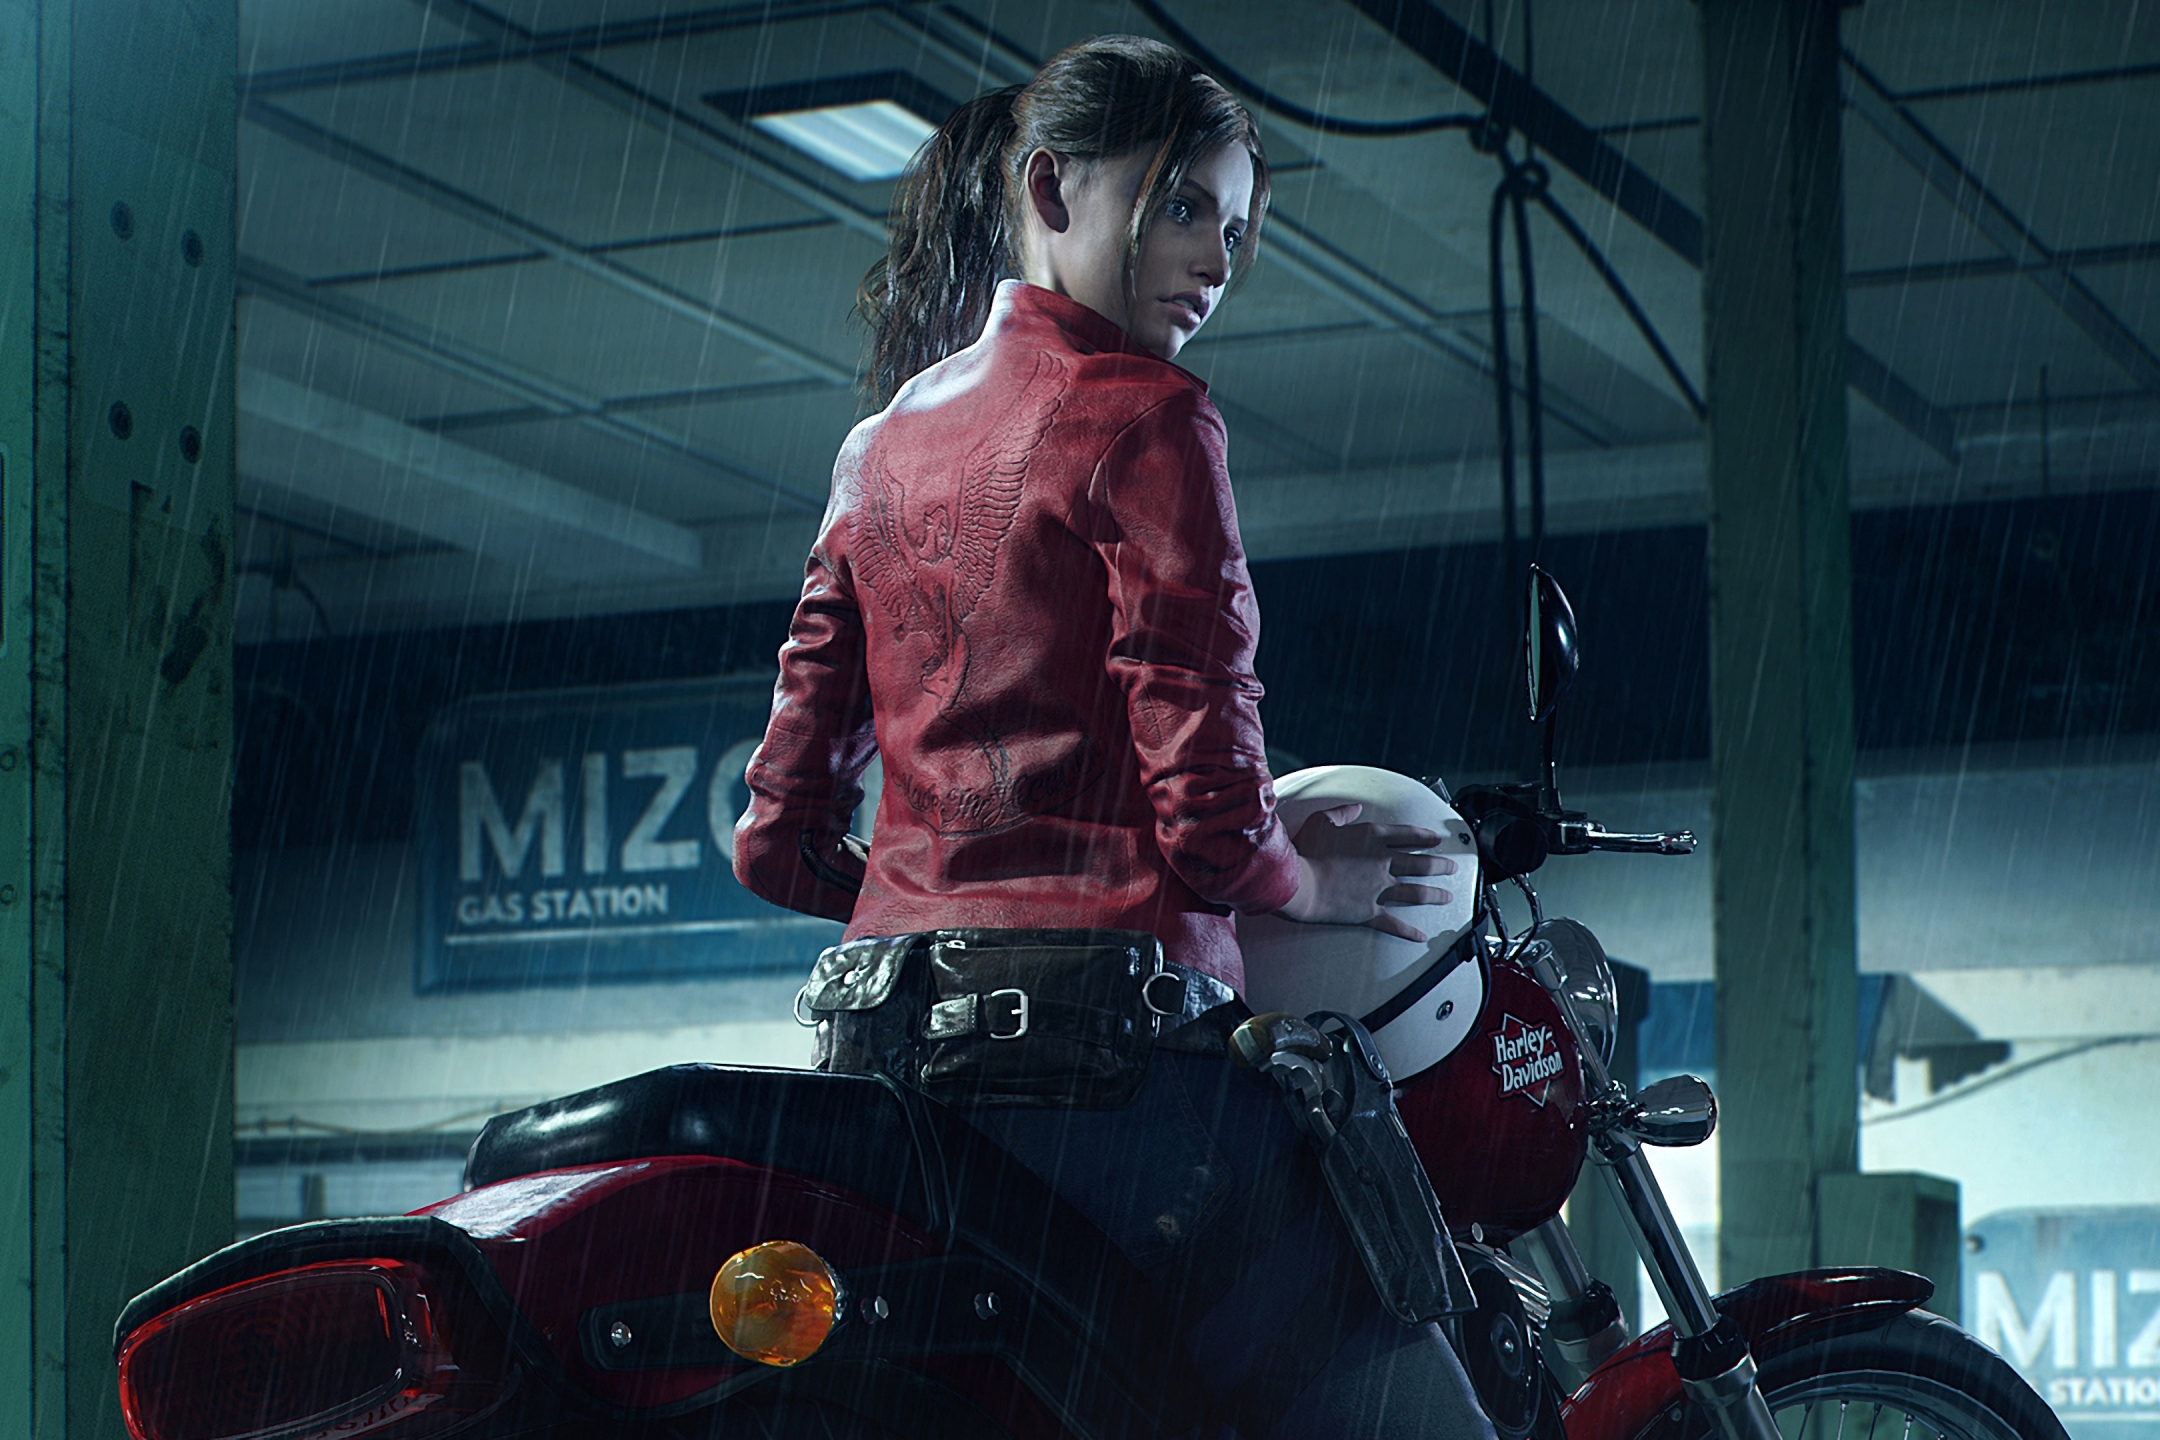 Baixar papel de parede para celular de Resident Evil, Harley Davidson, Videogame, Claire Redfield, Resident Evil 2 (2019) gratuito.